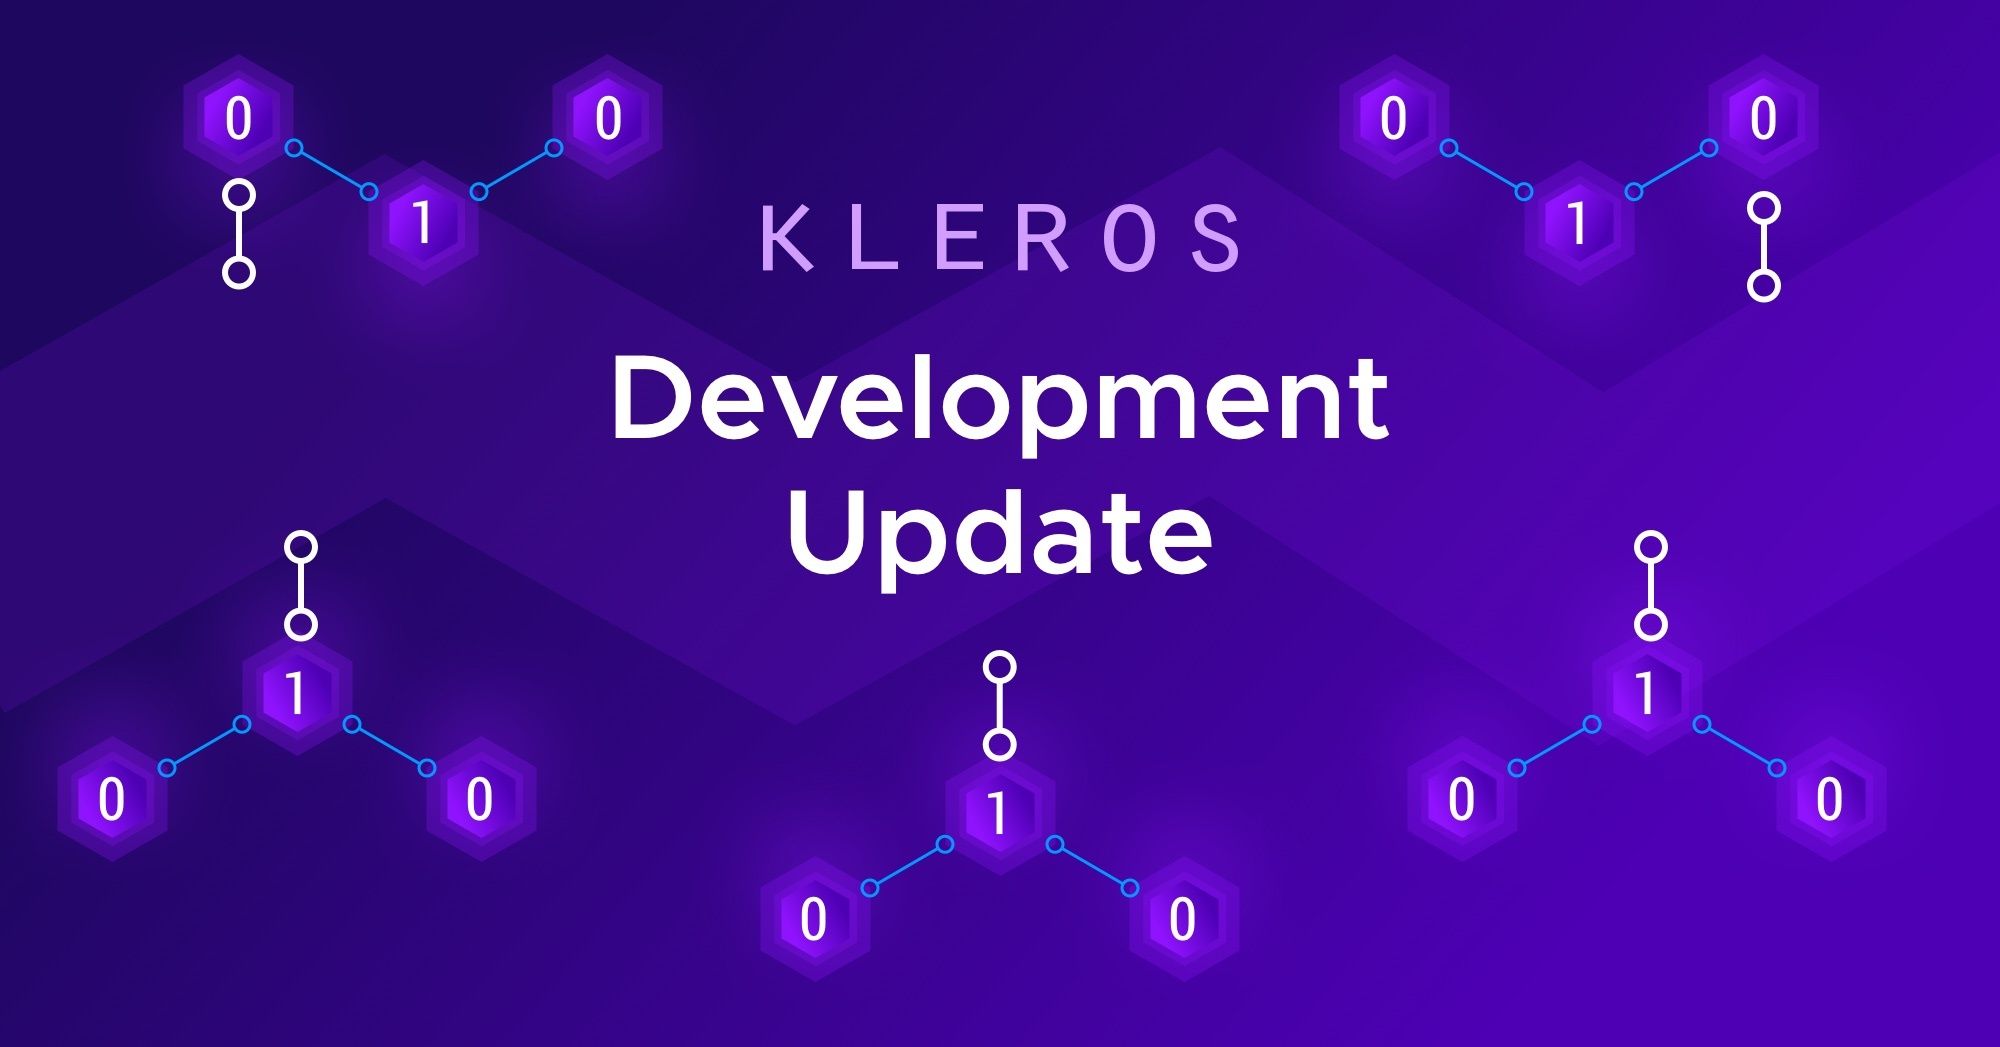 Kleros Development Update: April 2020